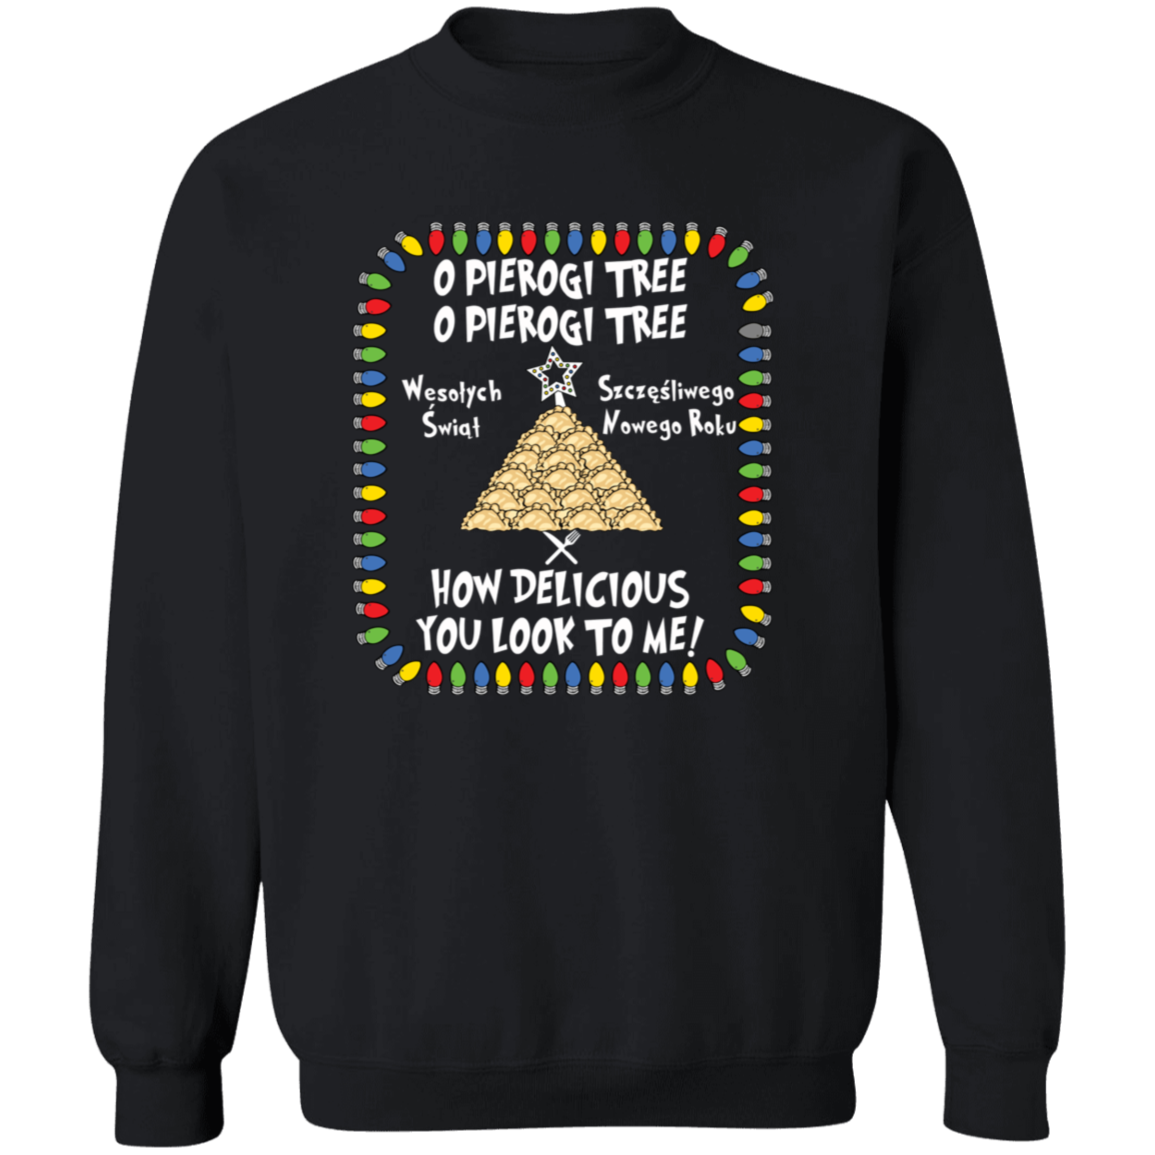 O Pierogi Tree Sweatshirt - How Delicious You Look To Me Sweatshirts CustomCat Black S 